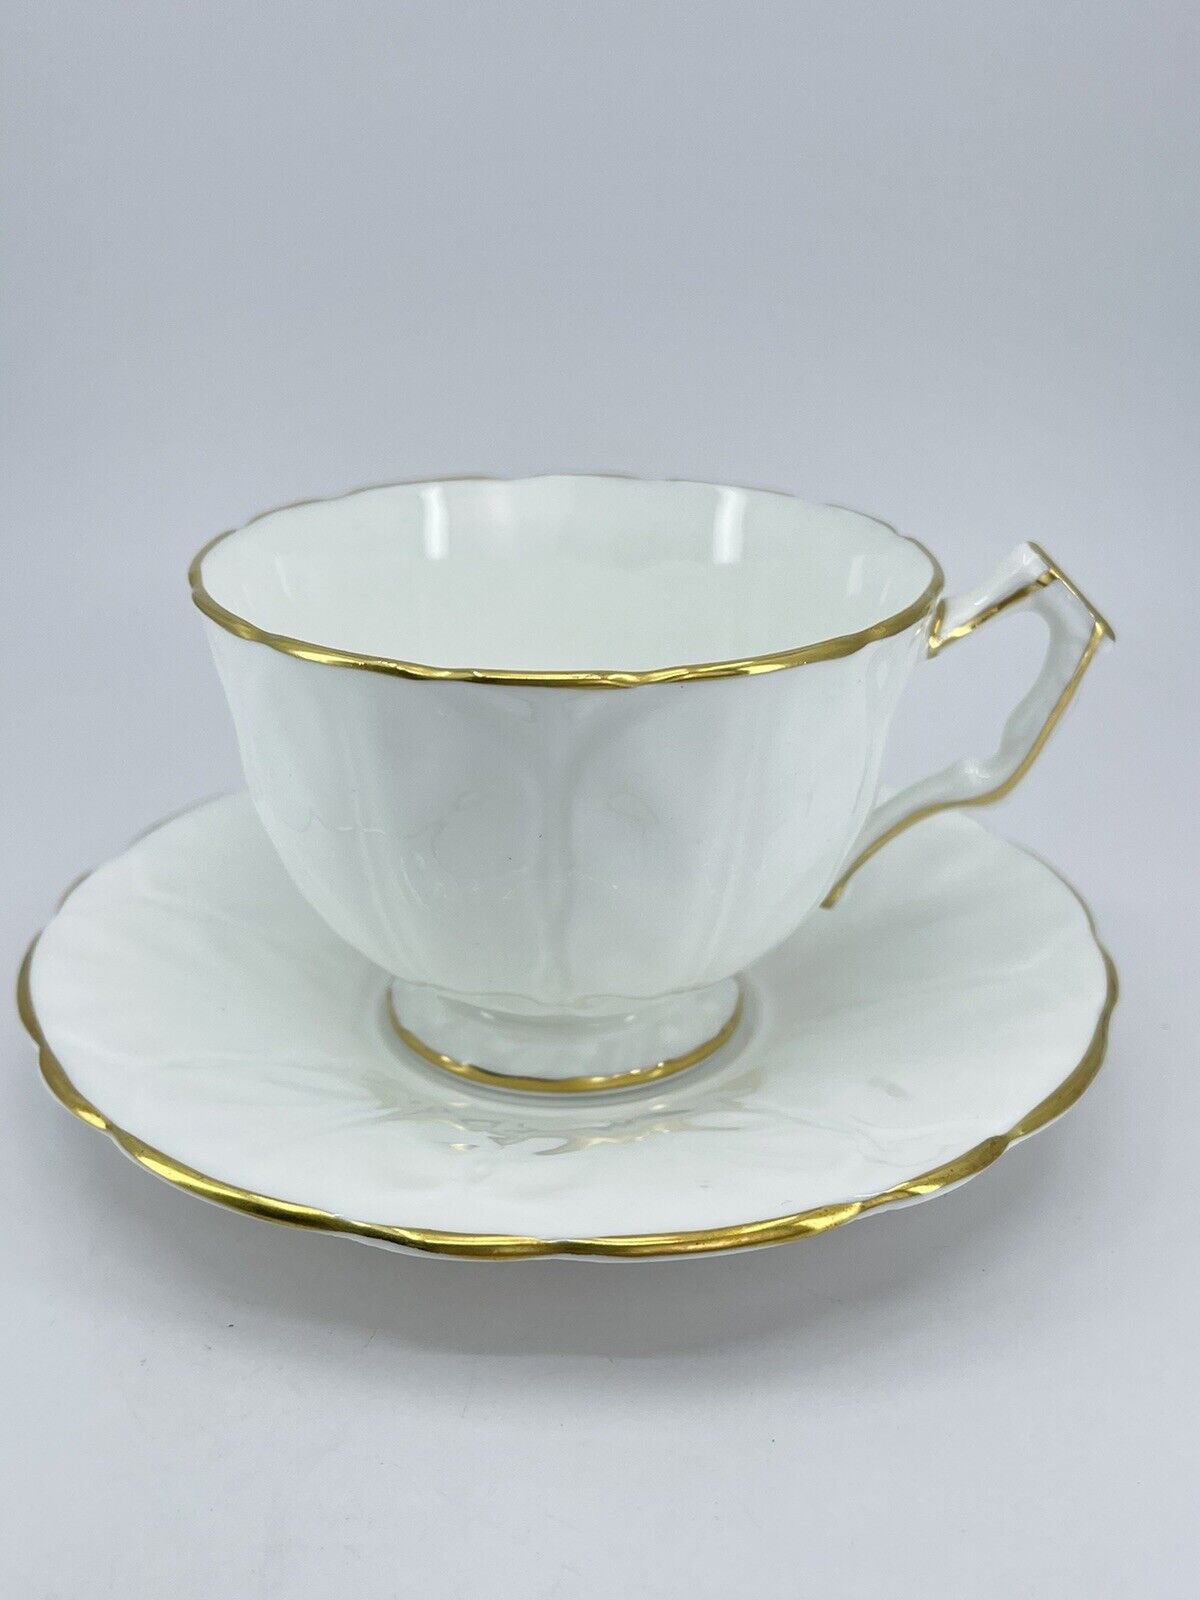 Vintage Aynsley Golden Crocus Tea Cup and Saucer Bone China 765788 England